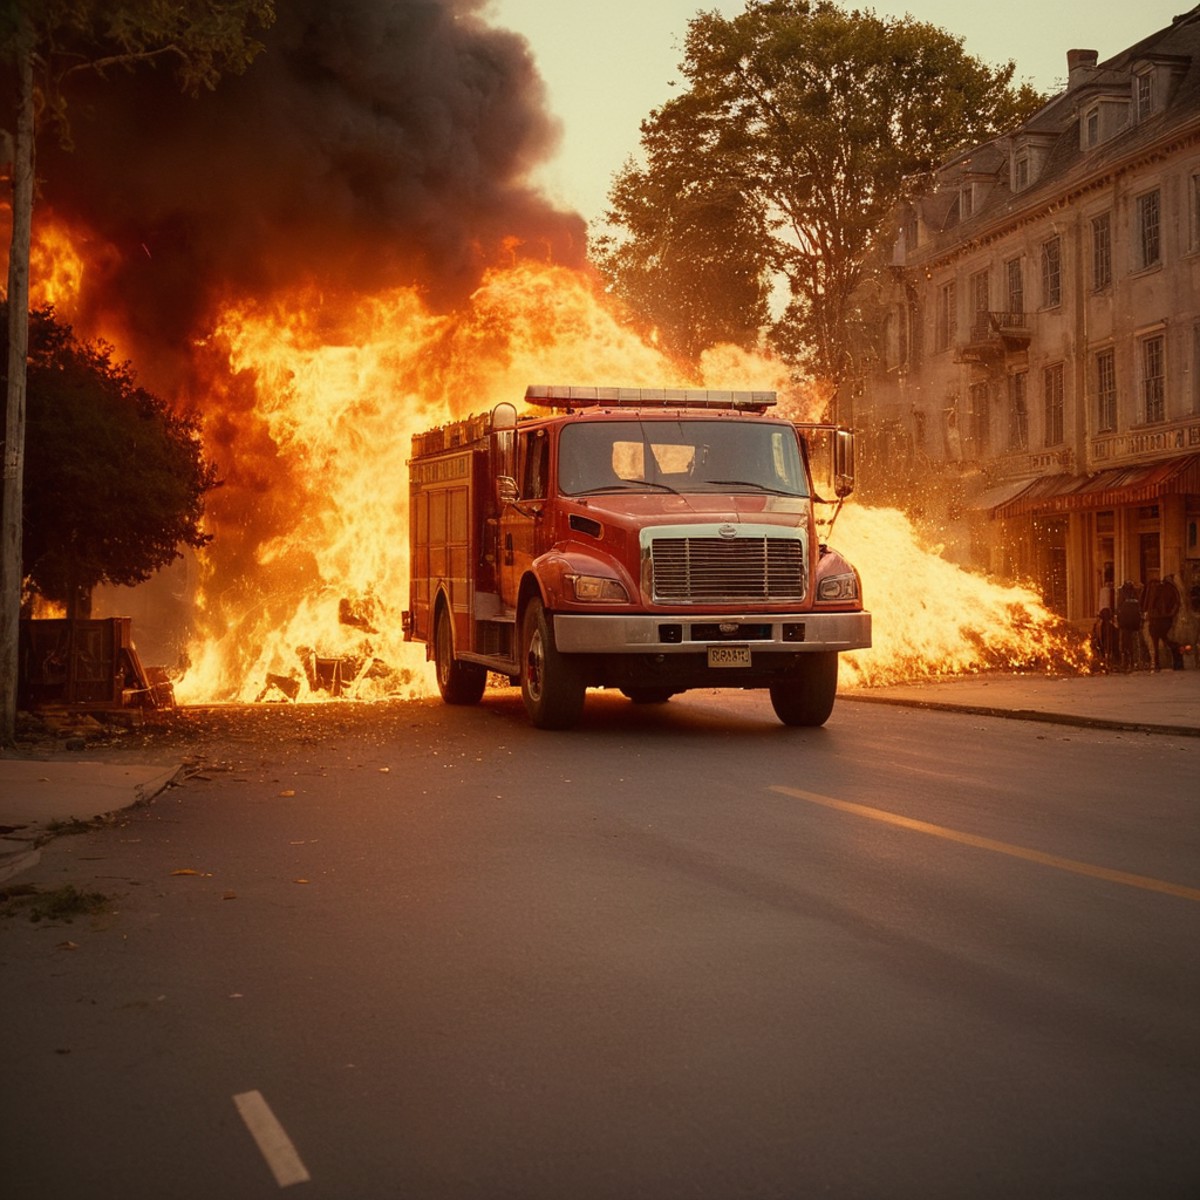 cinematic film still of  <lora:Warm Lighting Style:1>
warm light,a fire truck is on fire in the street,warm lighting style...